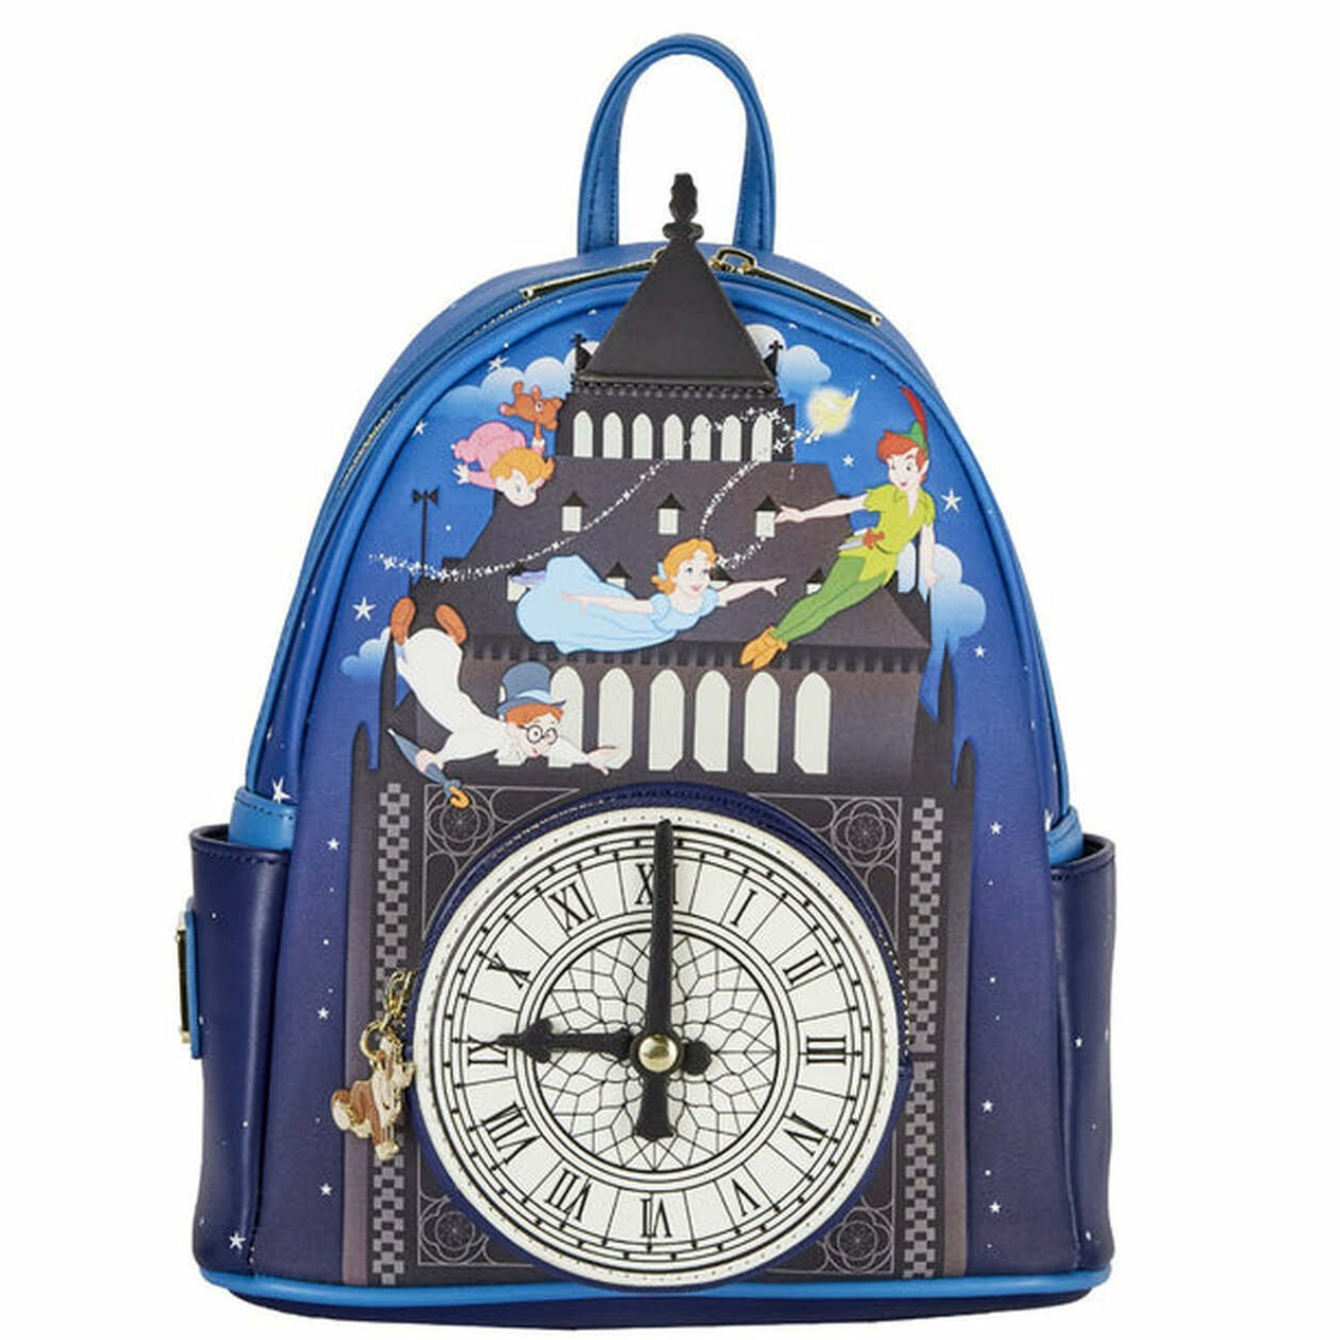 Peter Pan Clock Mini Backpack Loungefly